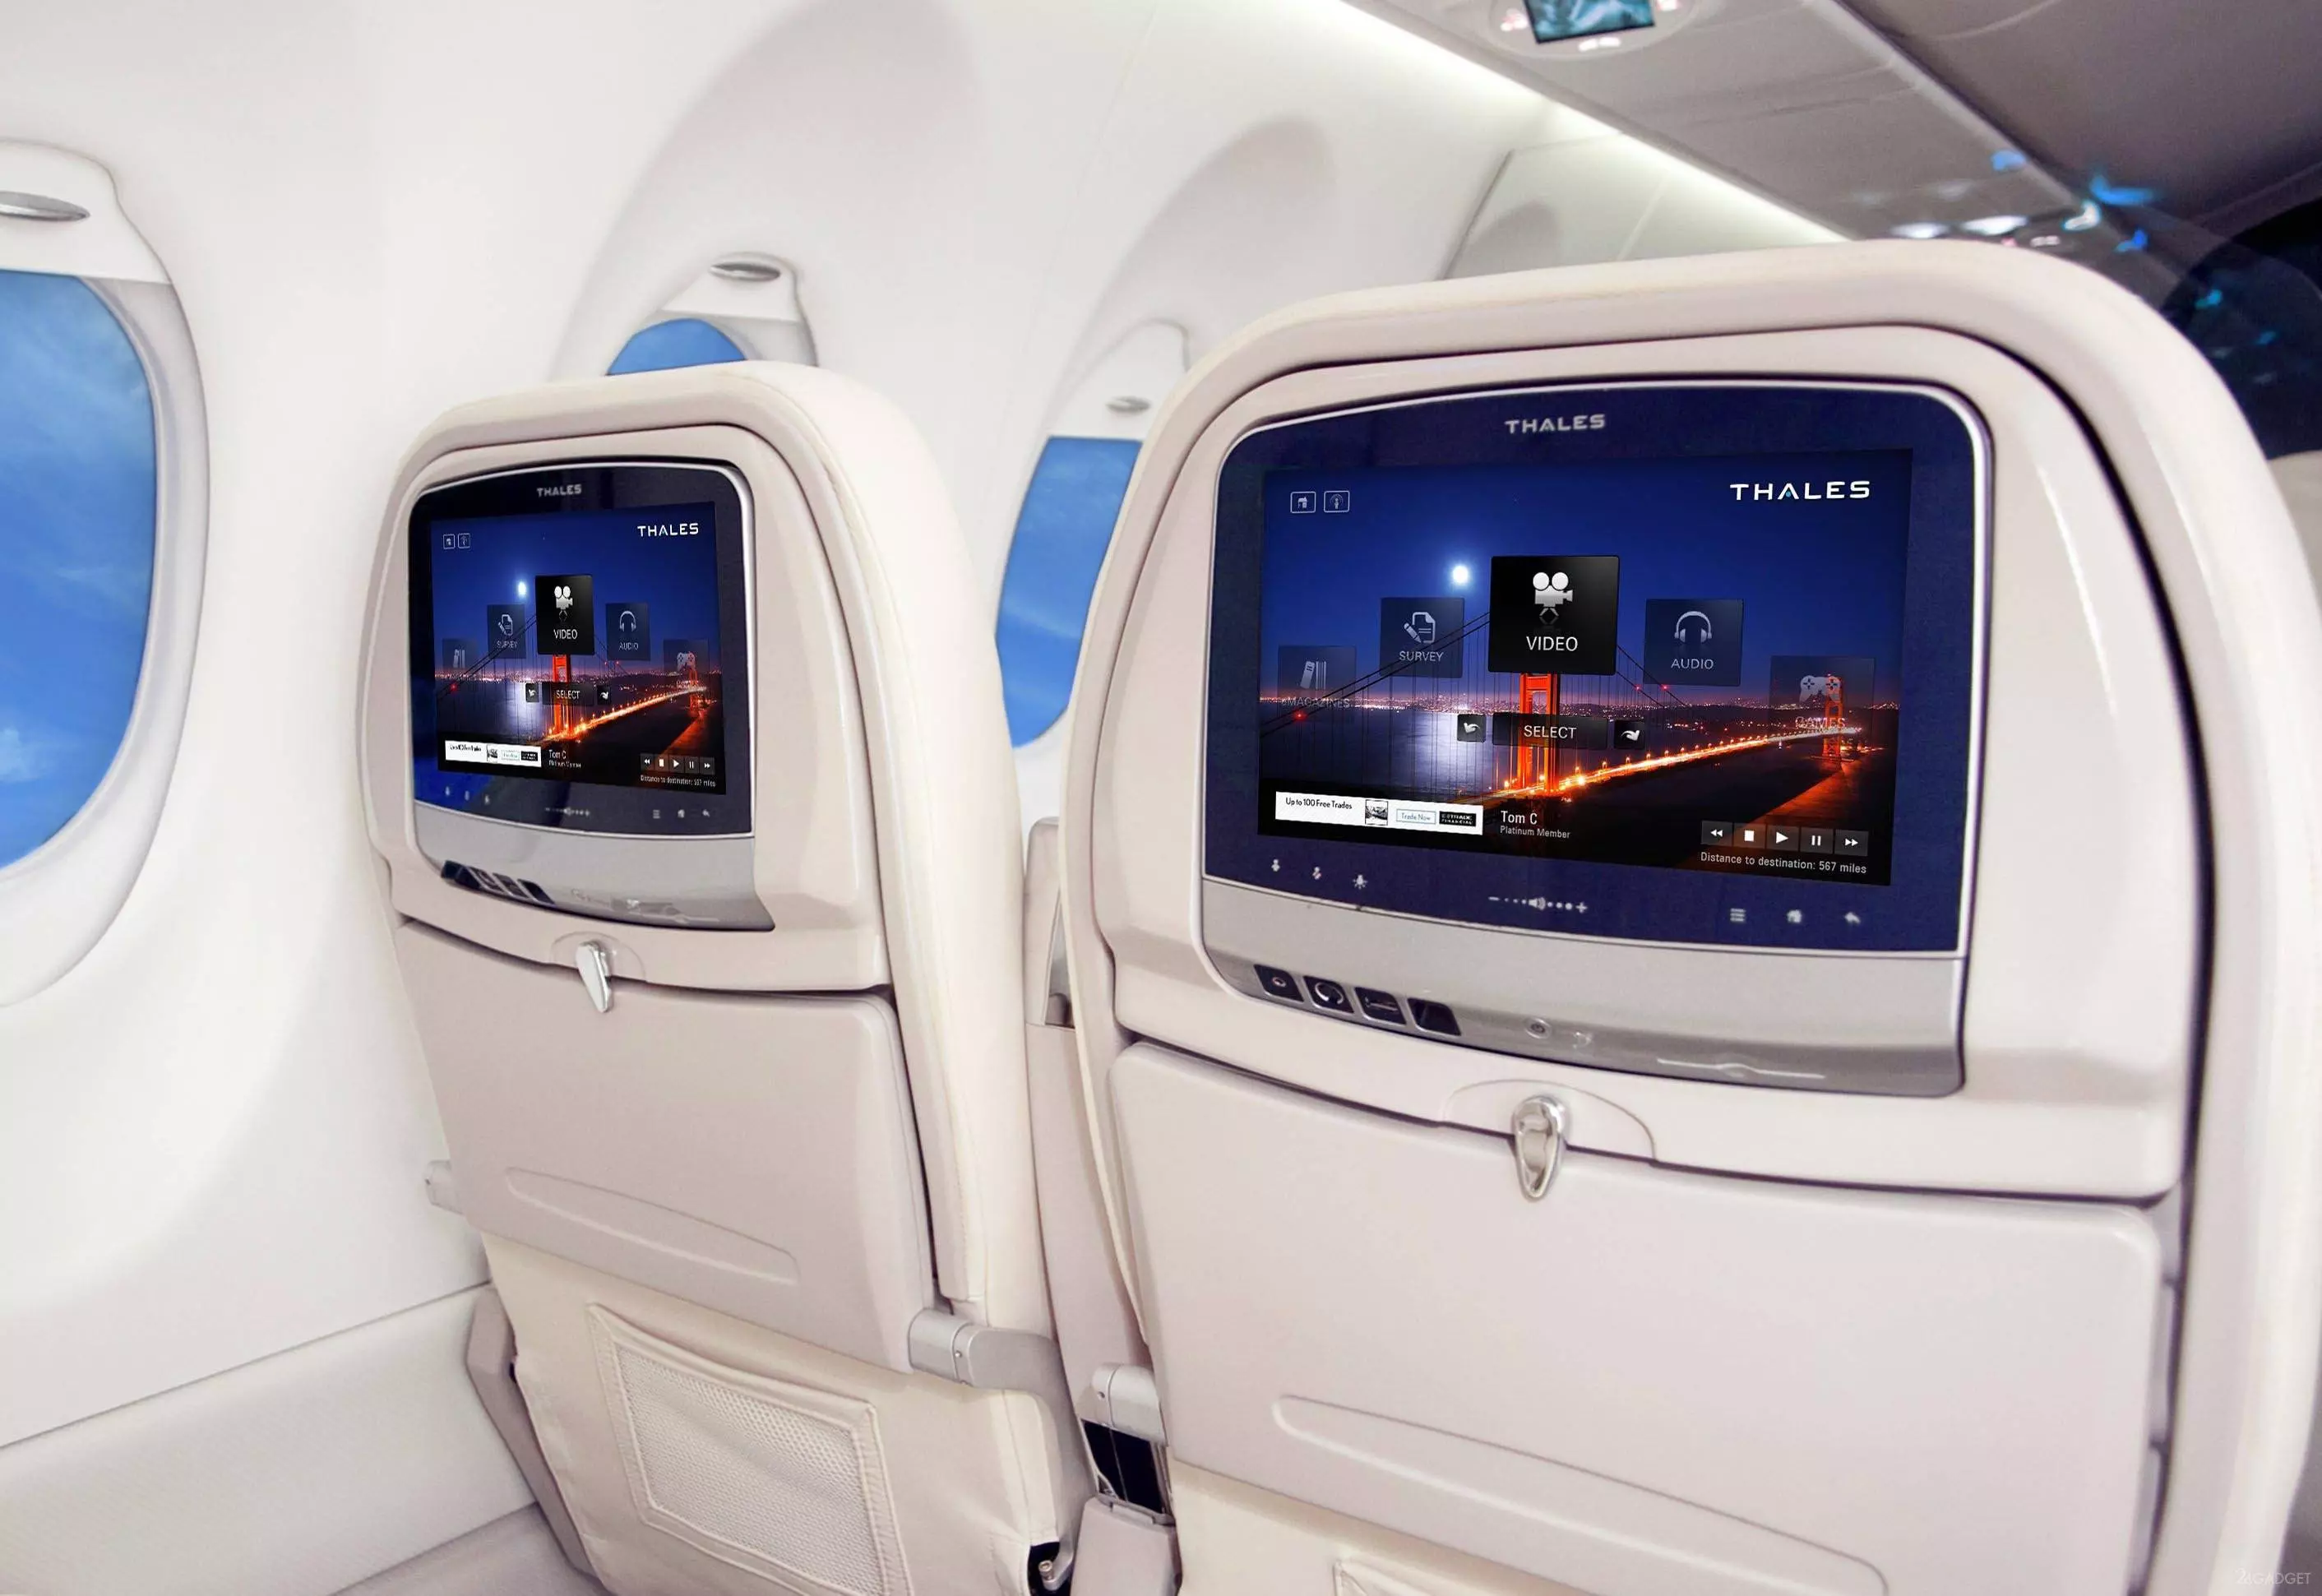 S7 airlines запустила систему развлечений на борту